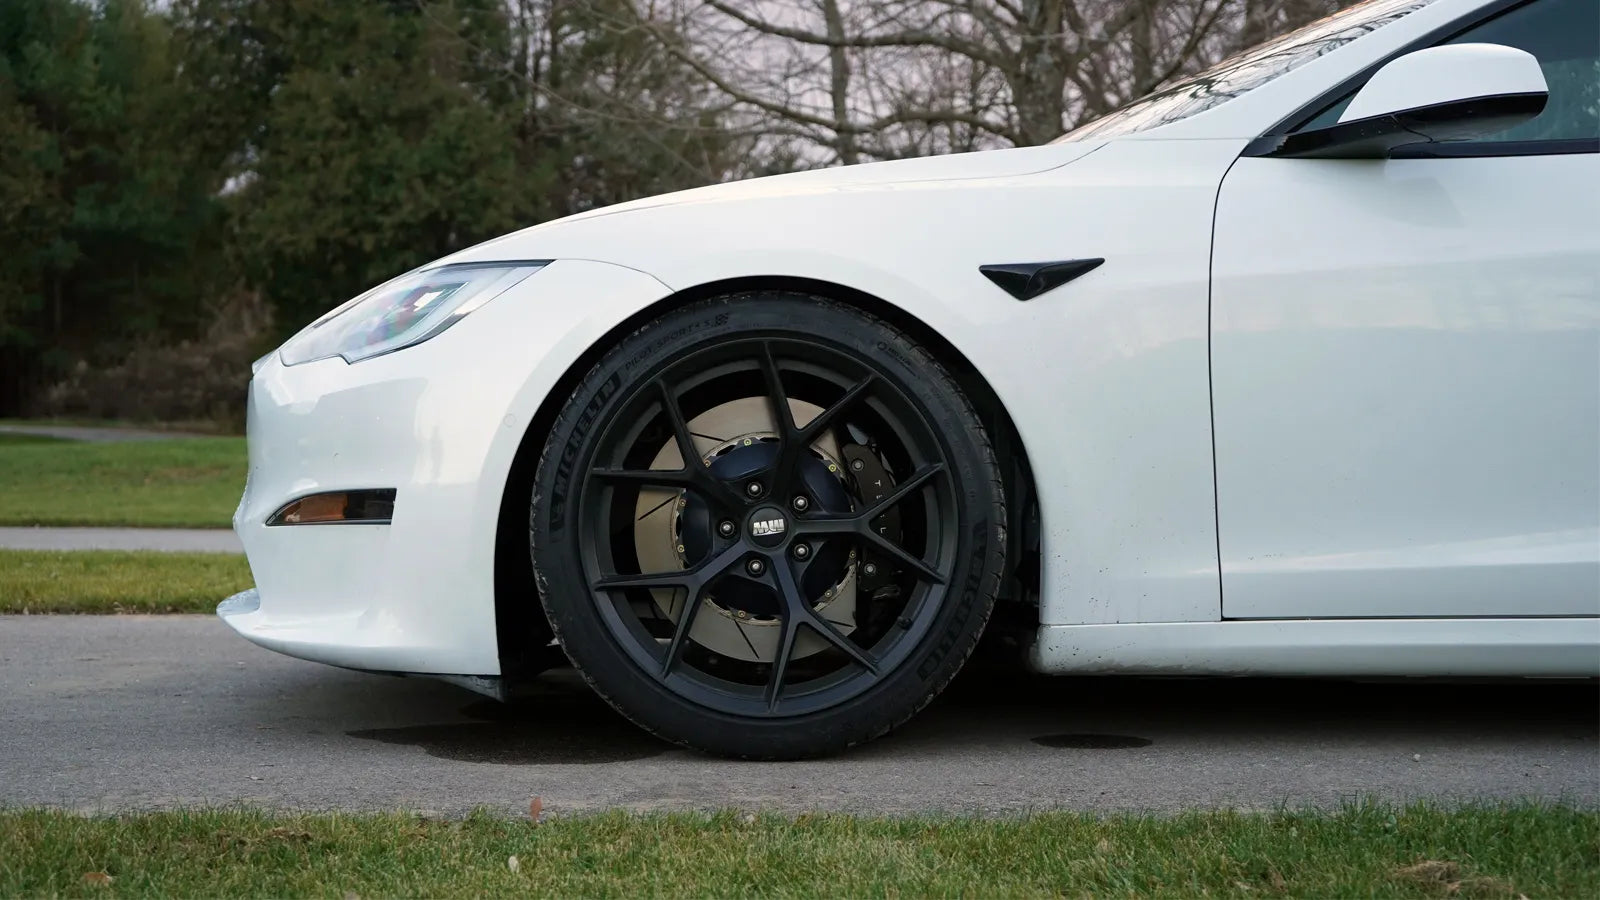 400mm Big Brake Kit for Tesla Model S Plaid and Long Range “Easy Big Fella”